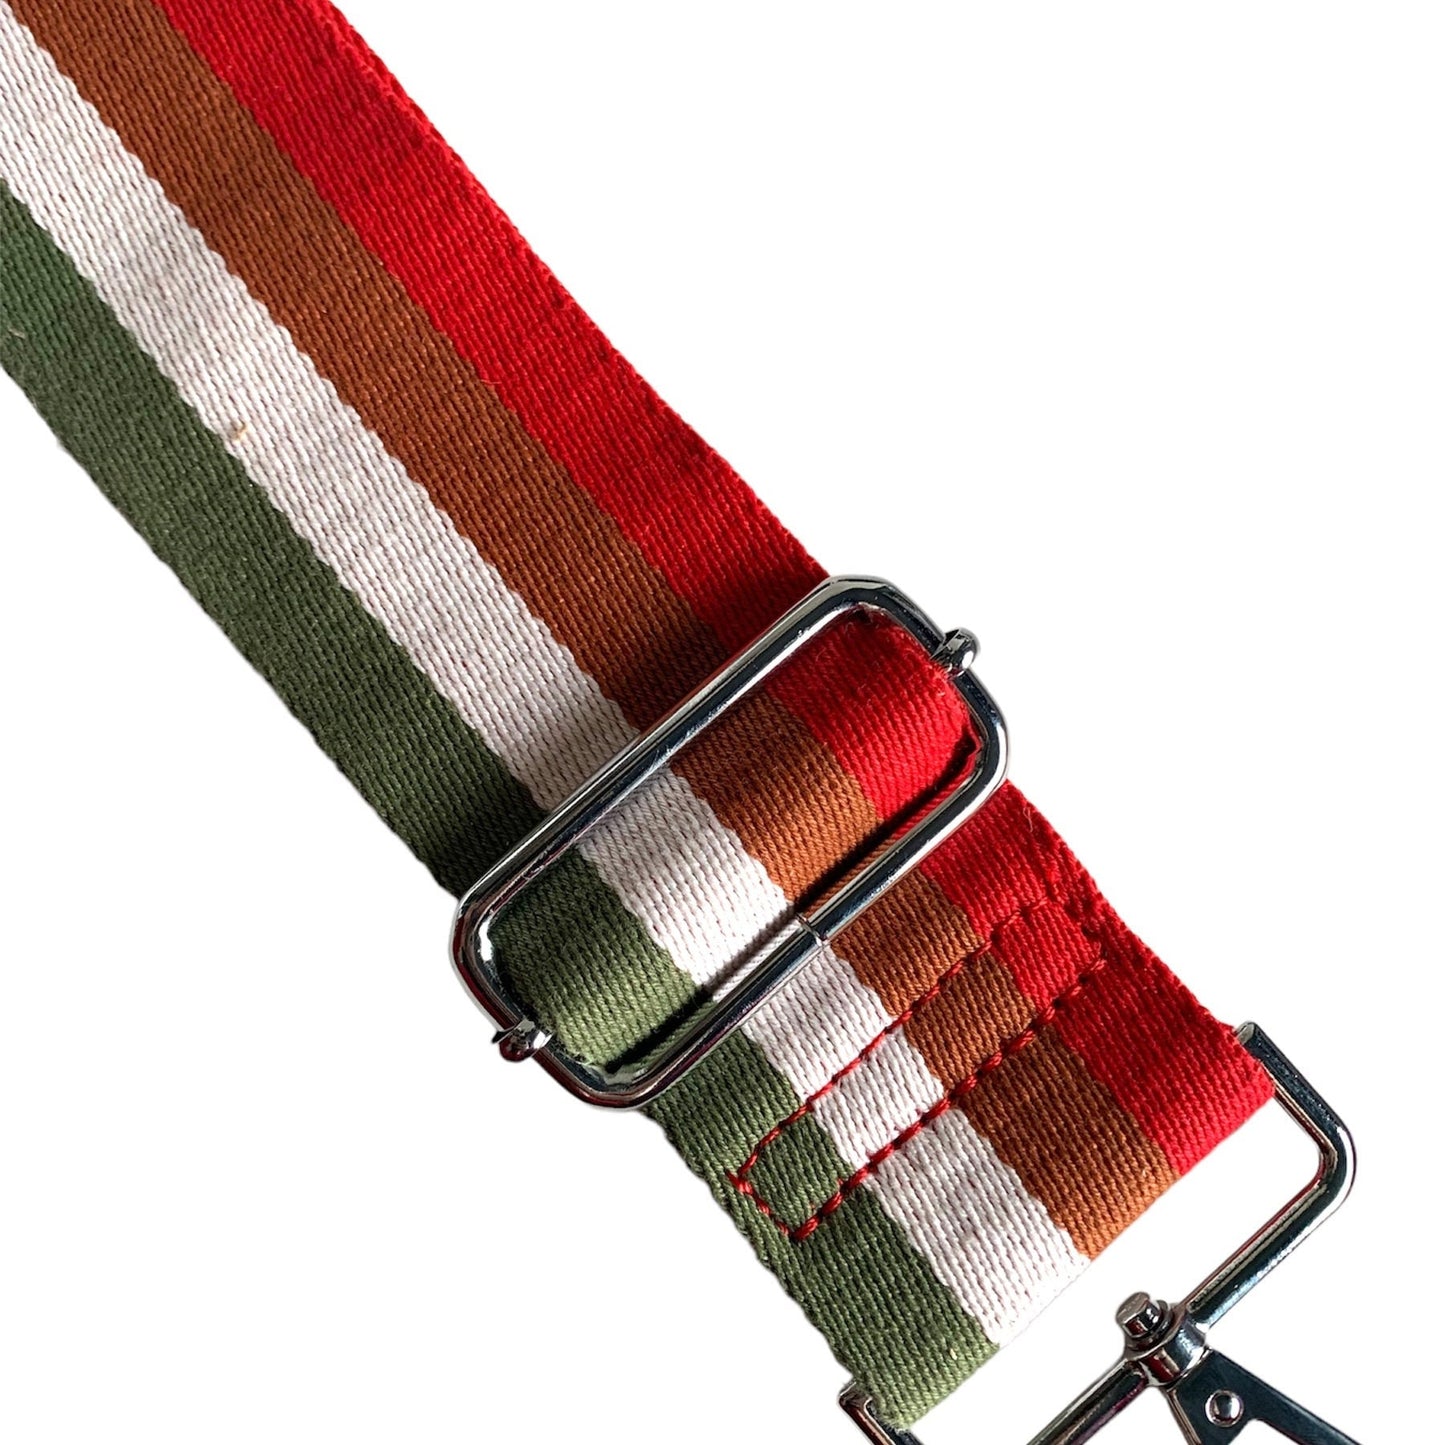 Stripe Canvas Bag Strap, Replacement Bag Strap, Red Stripe Print Bag Strap, Adjustable Handbag Strap